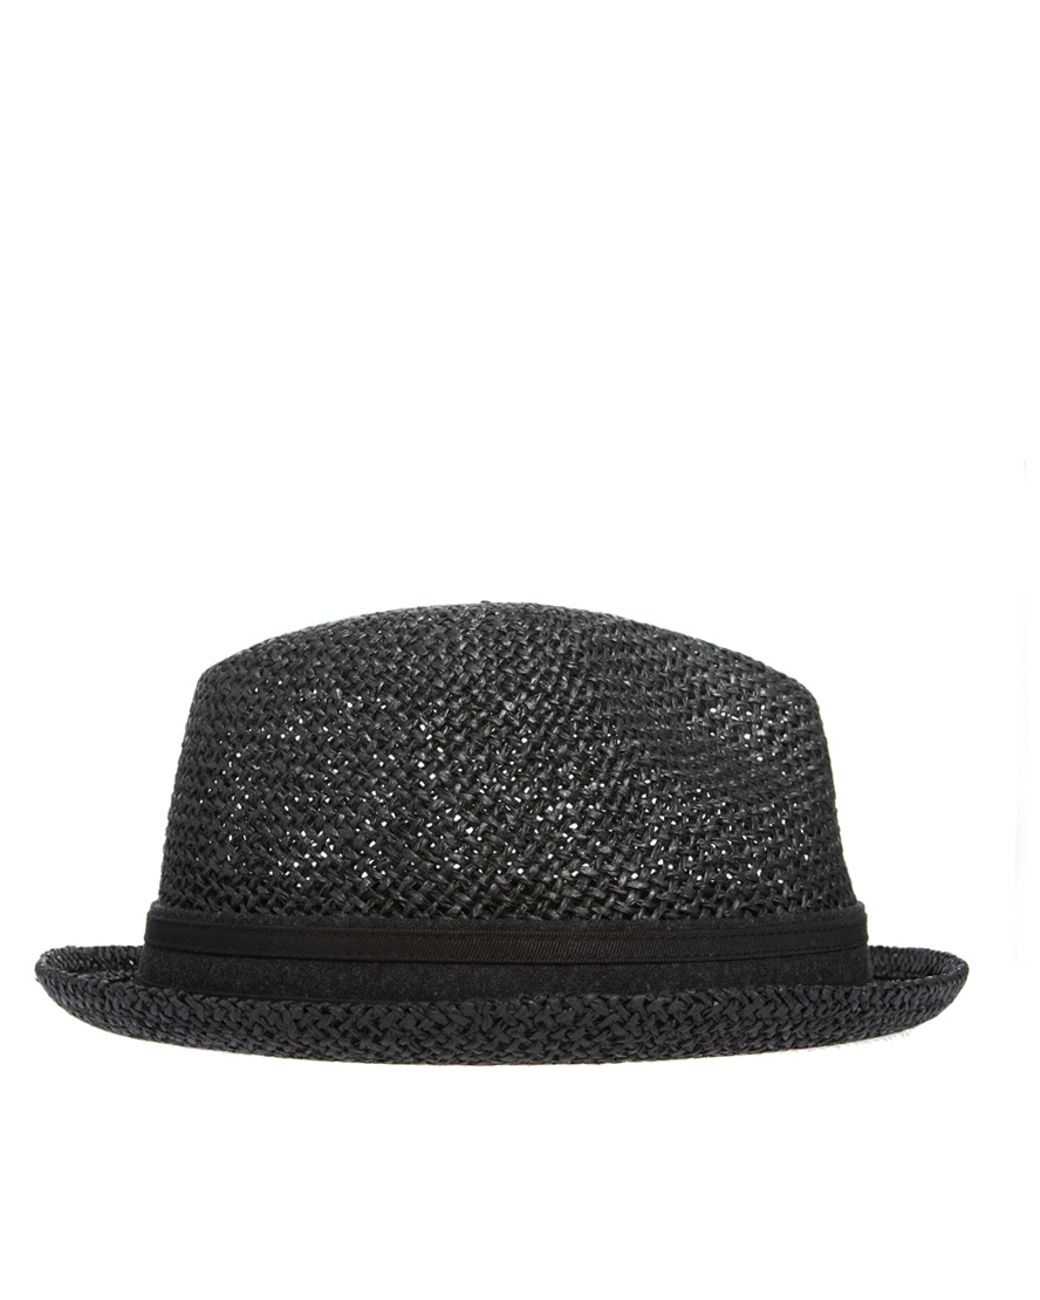 Vans Fedora Hat in Black for Men